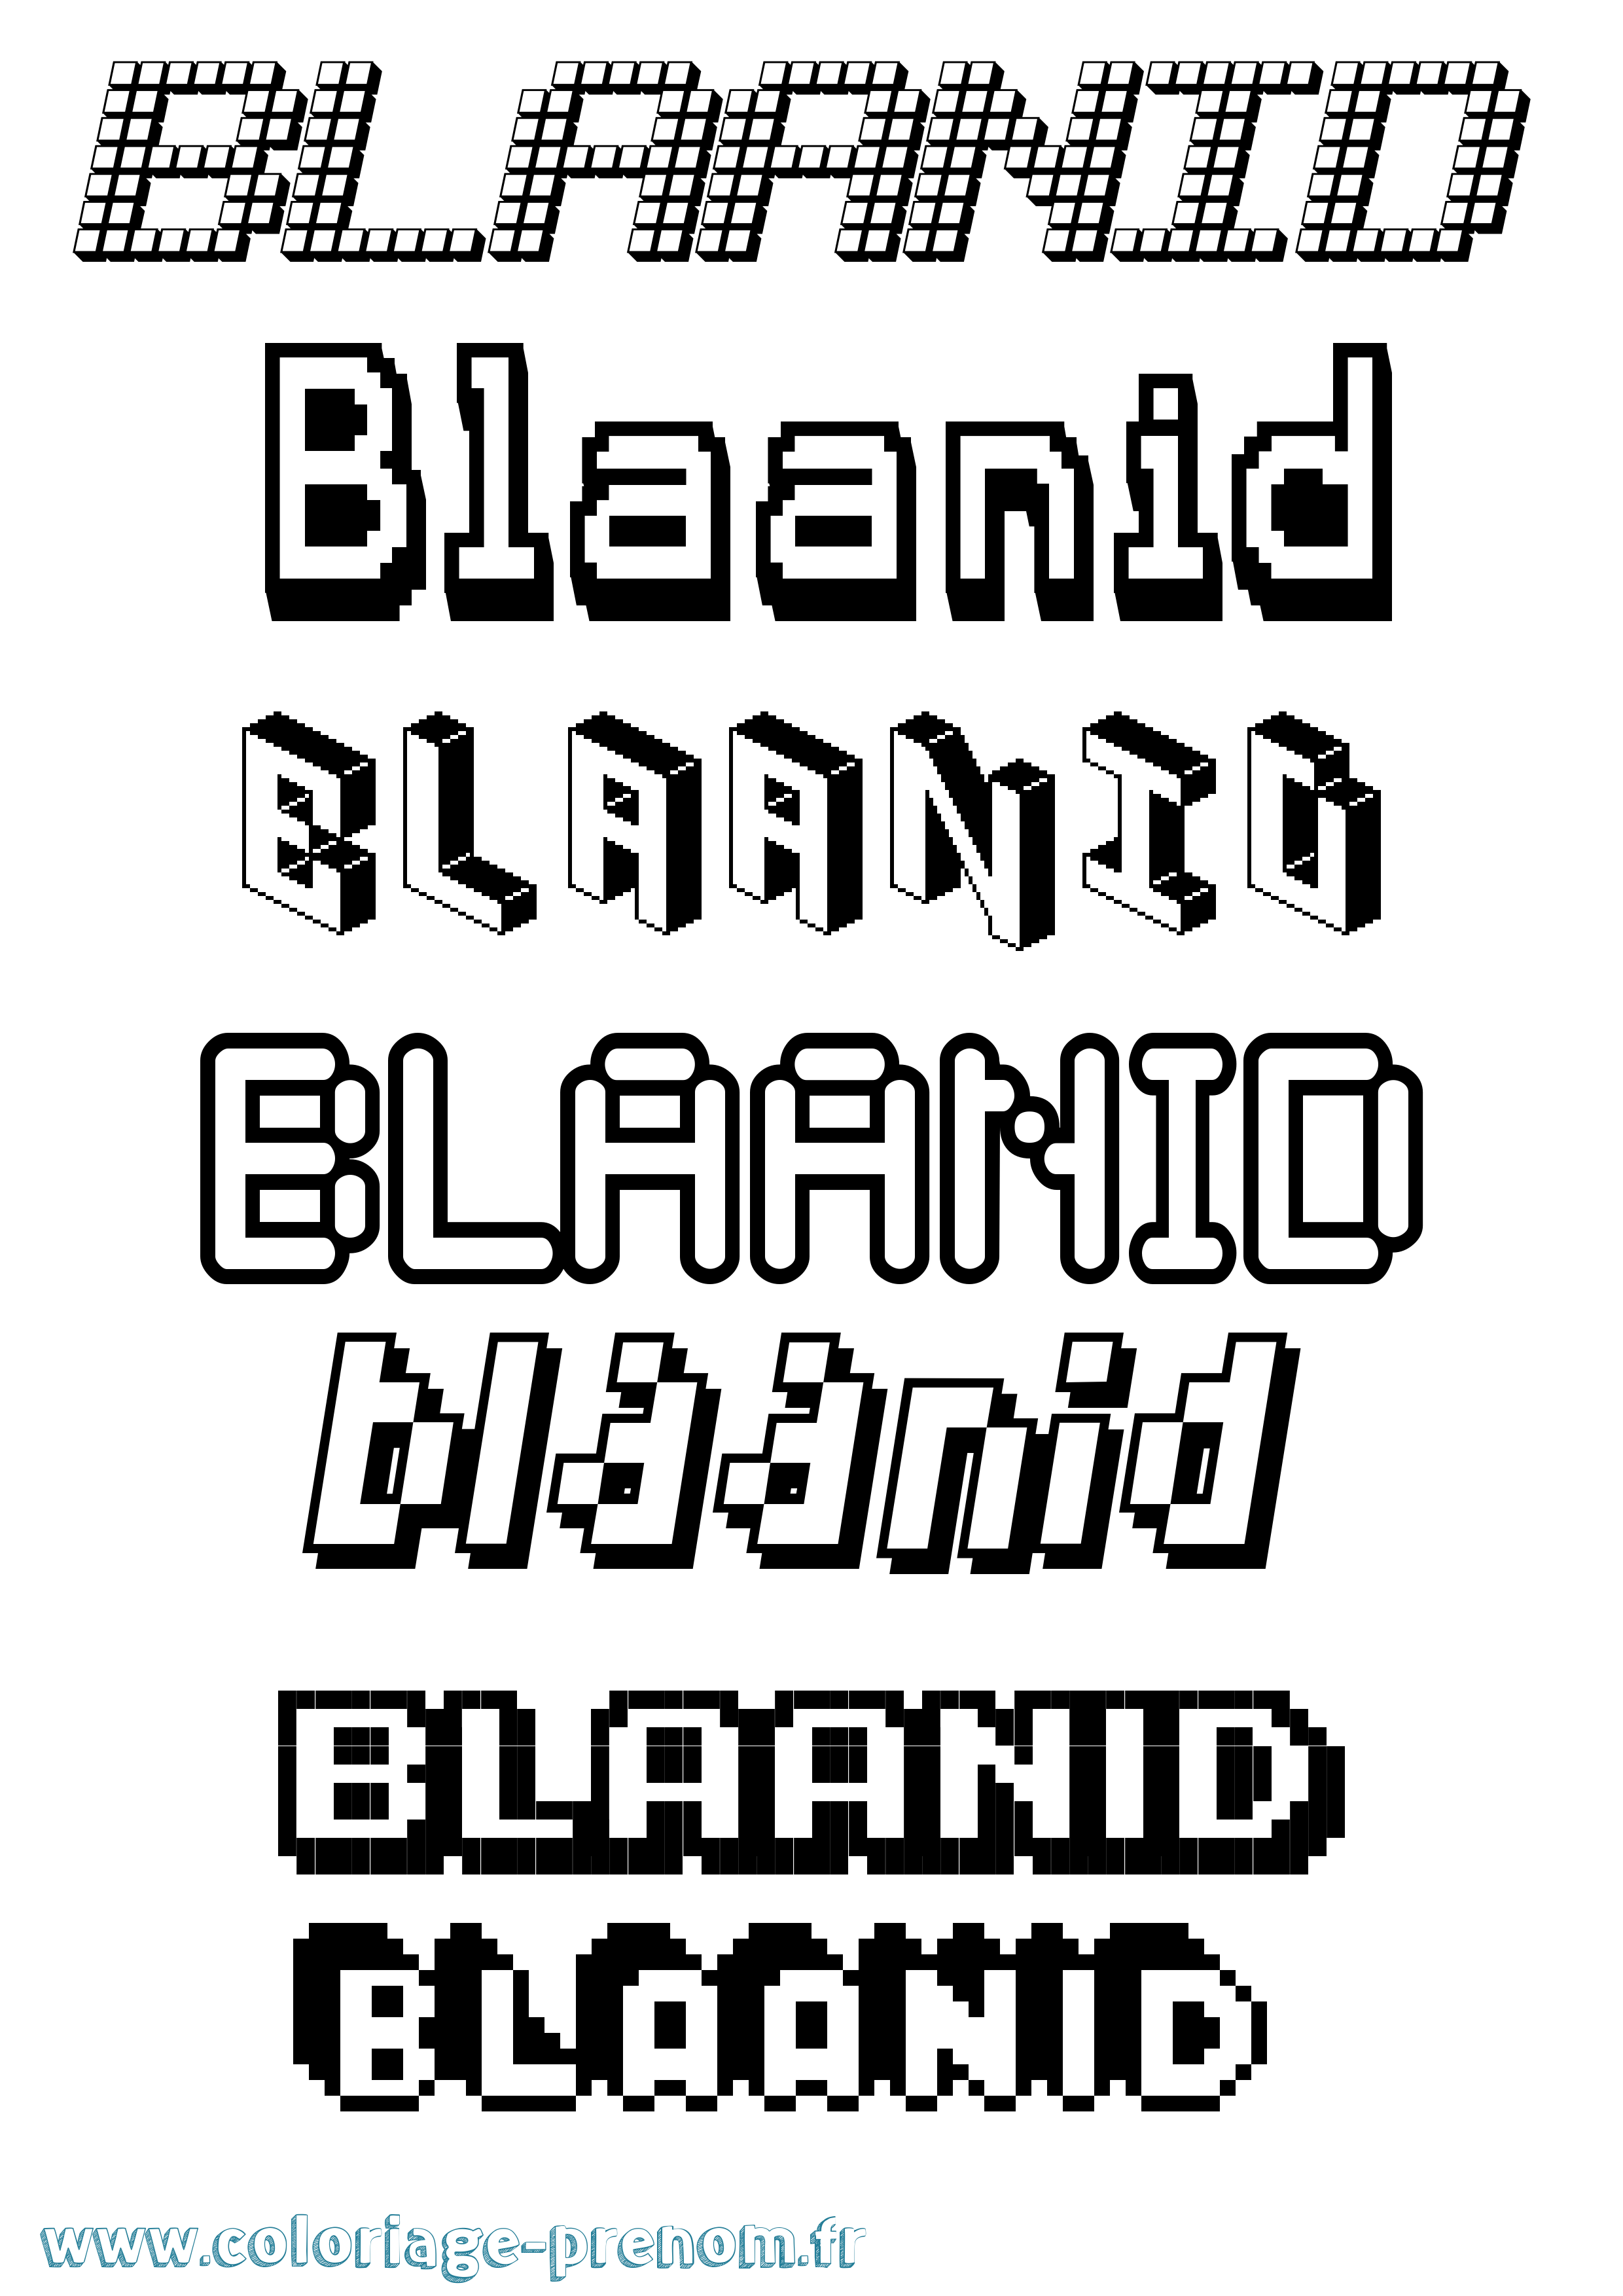 Coloriage prénom Blaanid Pixel